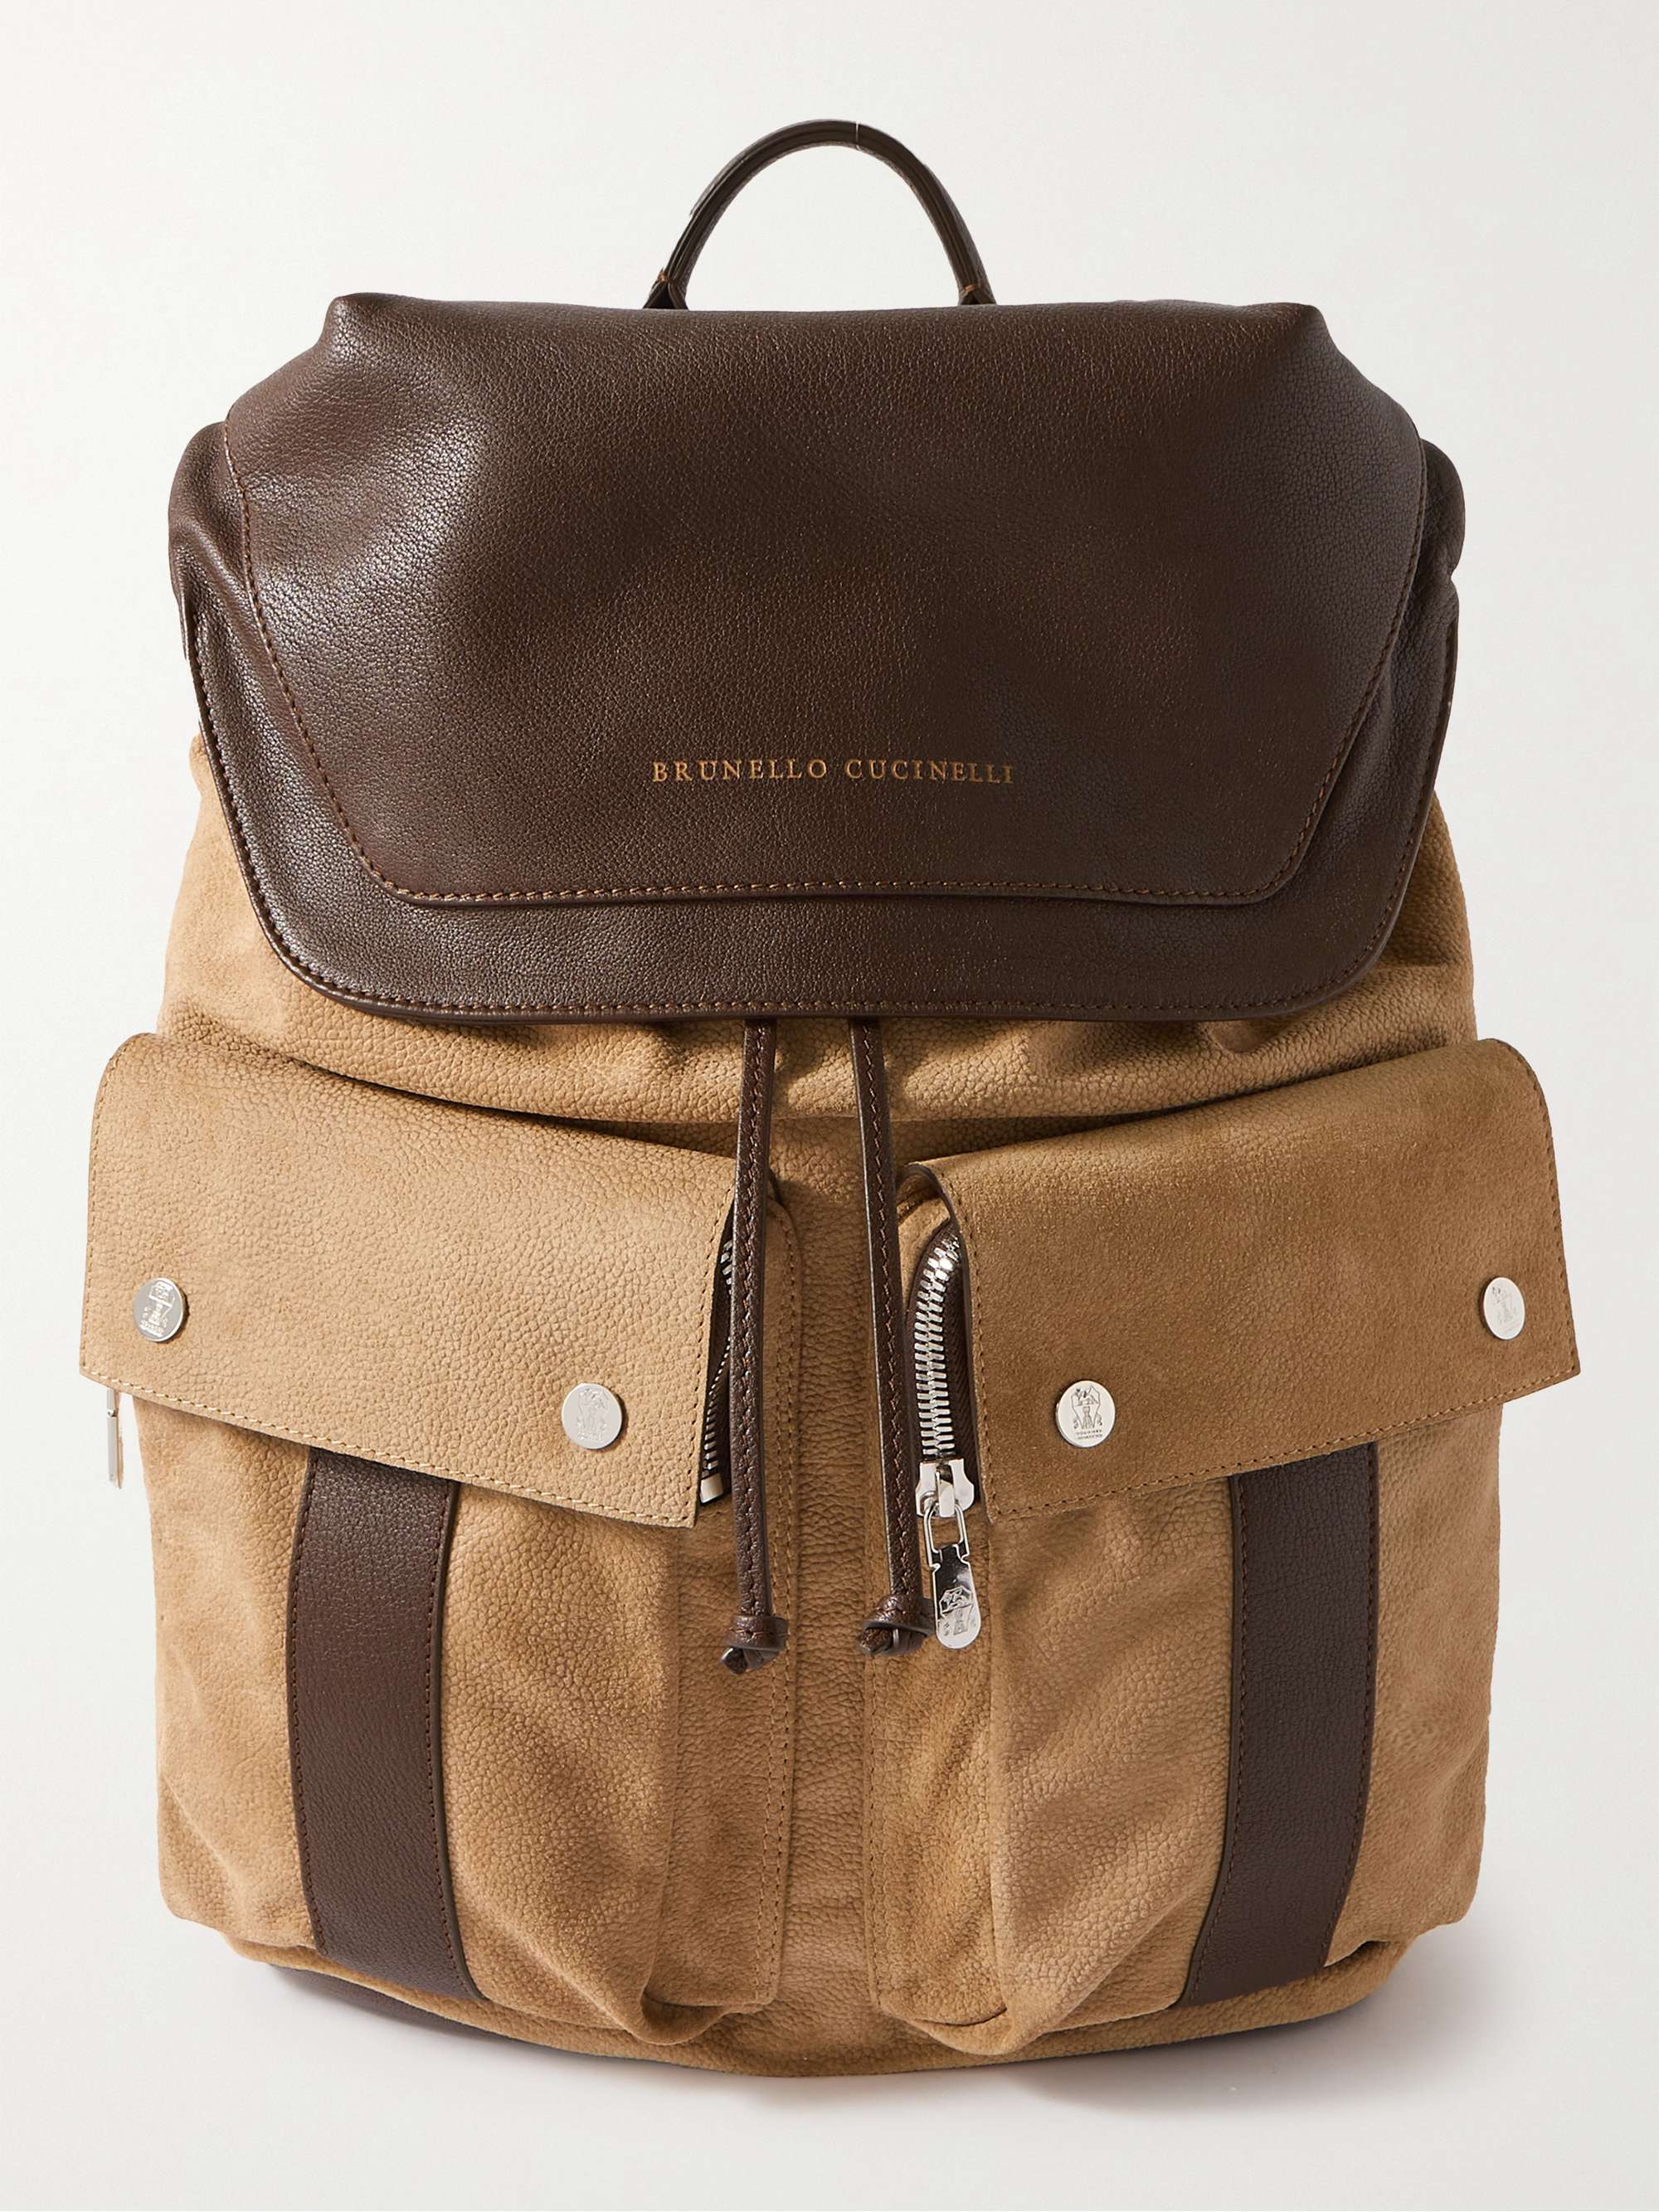 BRUNELLO CUCINELLI Leather-Trimmed Suede Backpack | MR PORTER